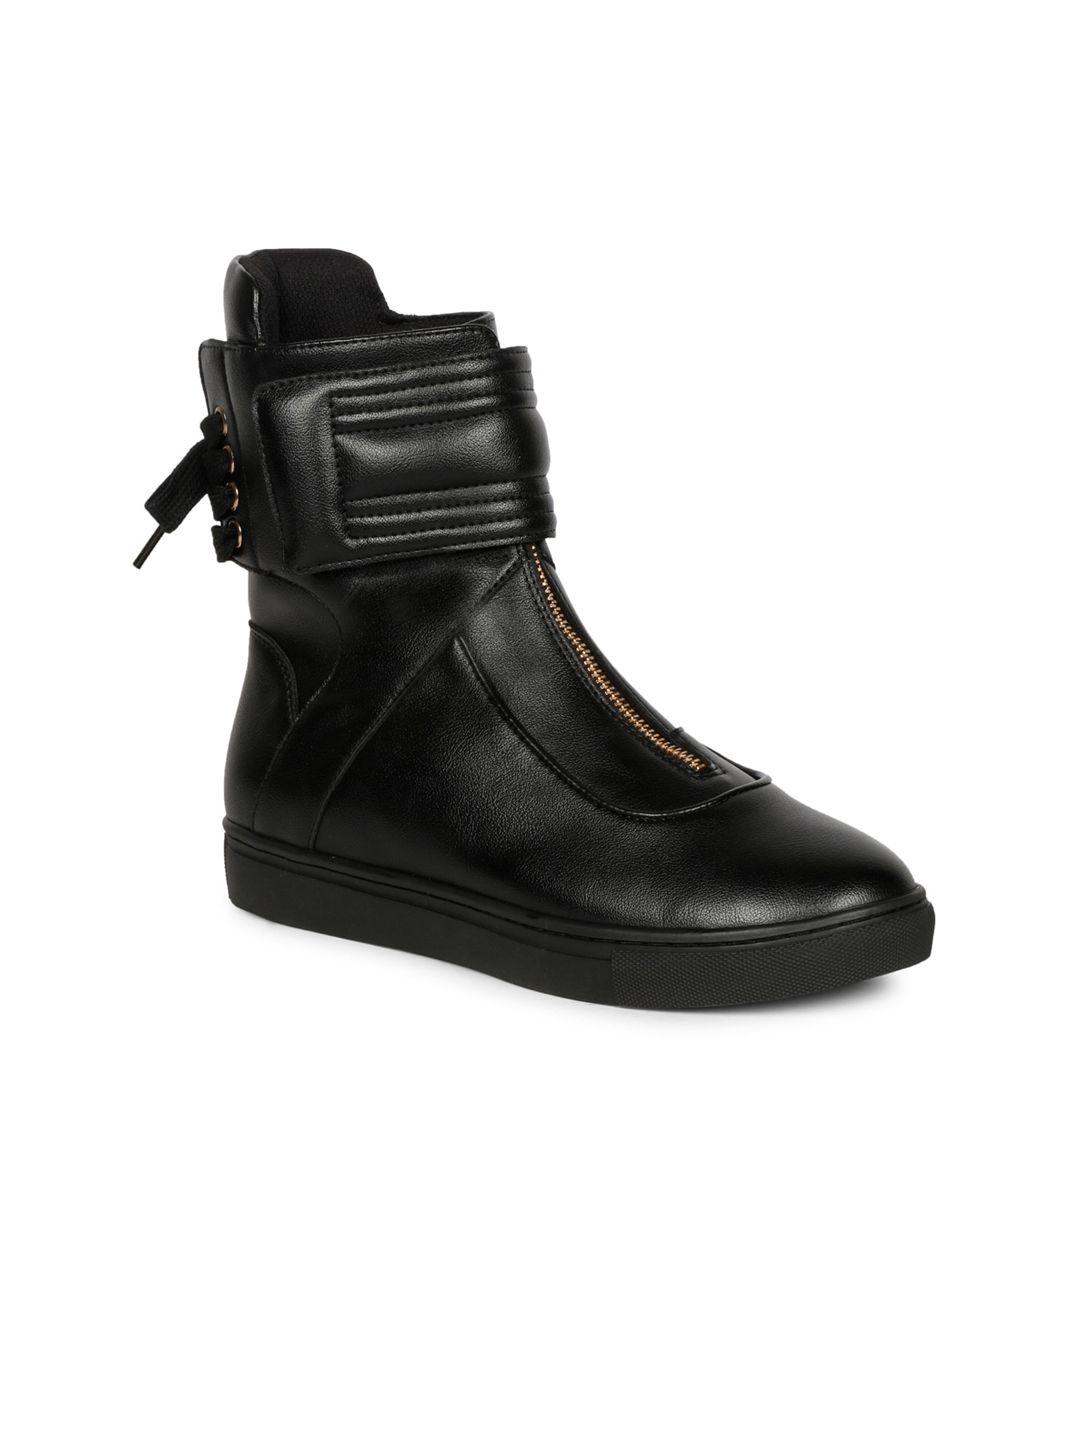 saint-g-black-leather-front-zipper-round-toe-mid-top-regular-boots